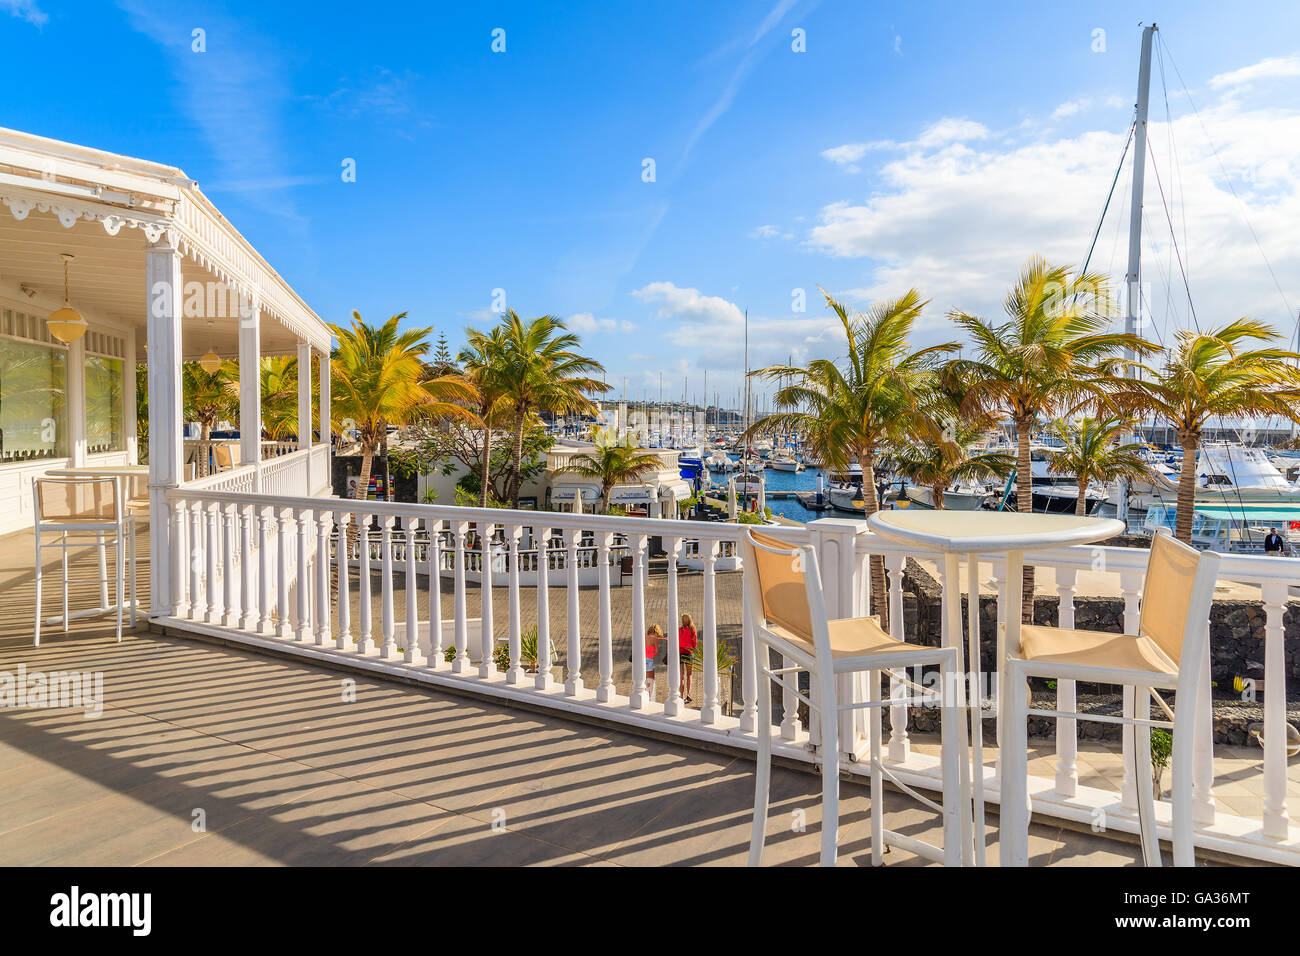 PUERTO CALERO MARINA, LANZAROTE ISLAND - JAN 17, 2015: traditional Caribbean style architecture of Puerto Calero marina. Yachting is a popular activity on Canary Islands. Stock Photo